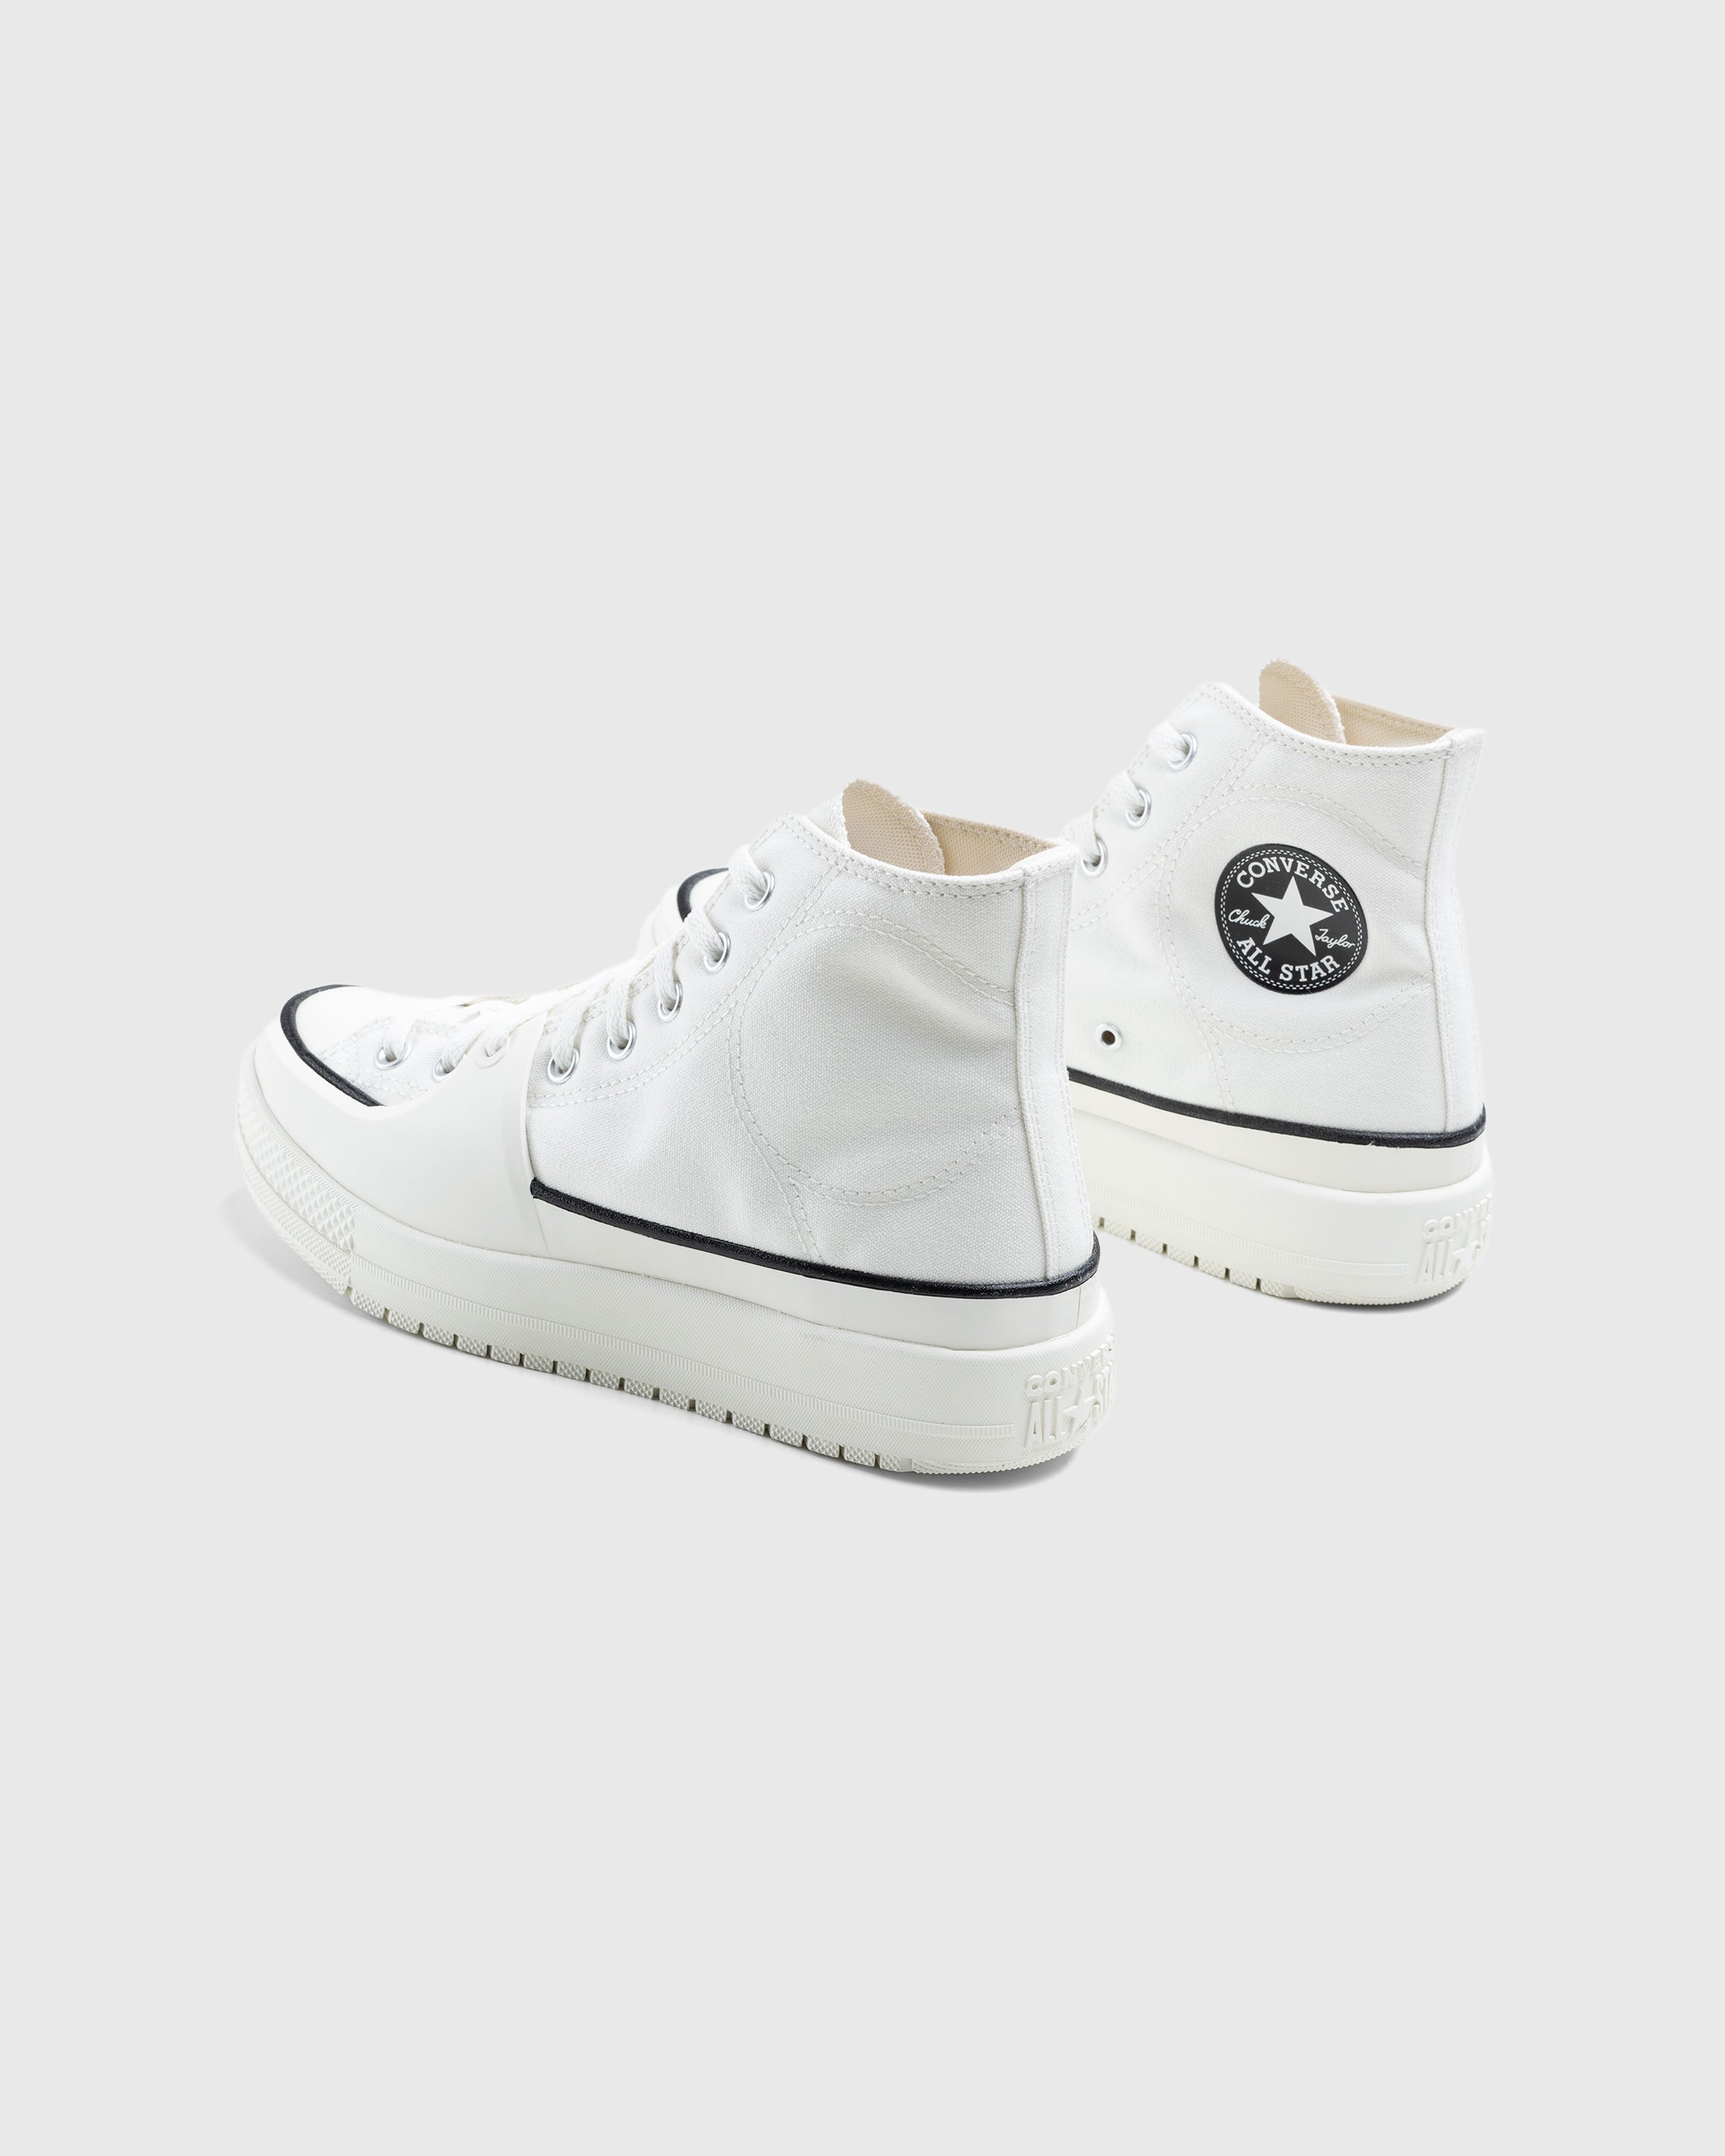 Converse - Chuck Taylor All Star Construct Hi Vintage White/Black/Egret - Footwear - Beige - Image 4